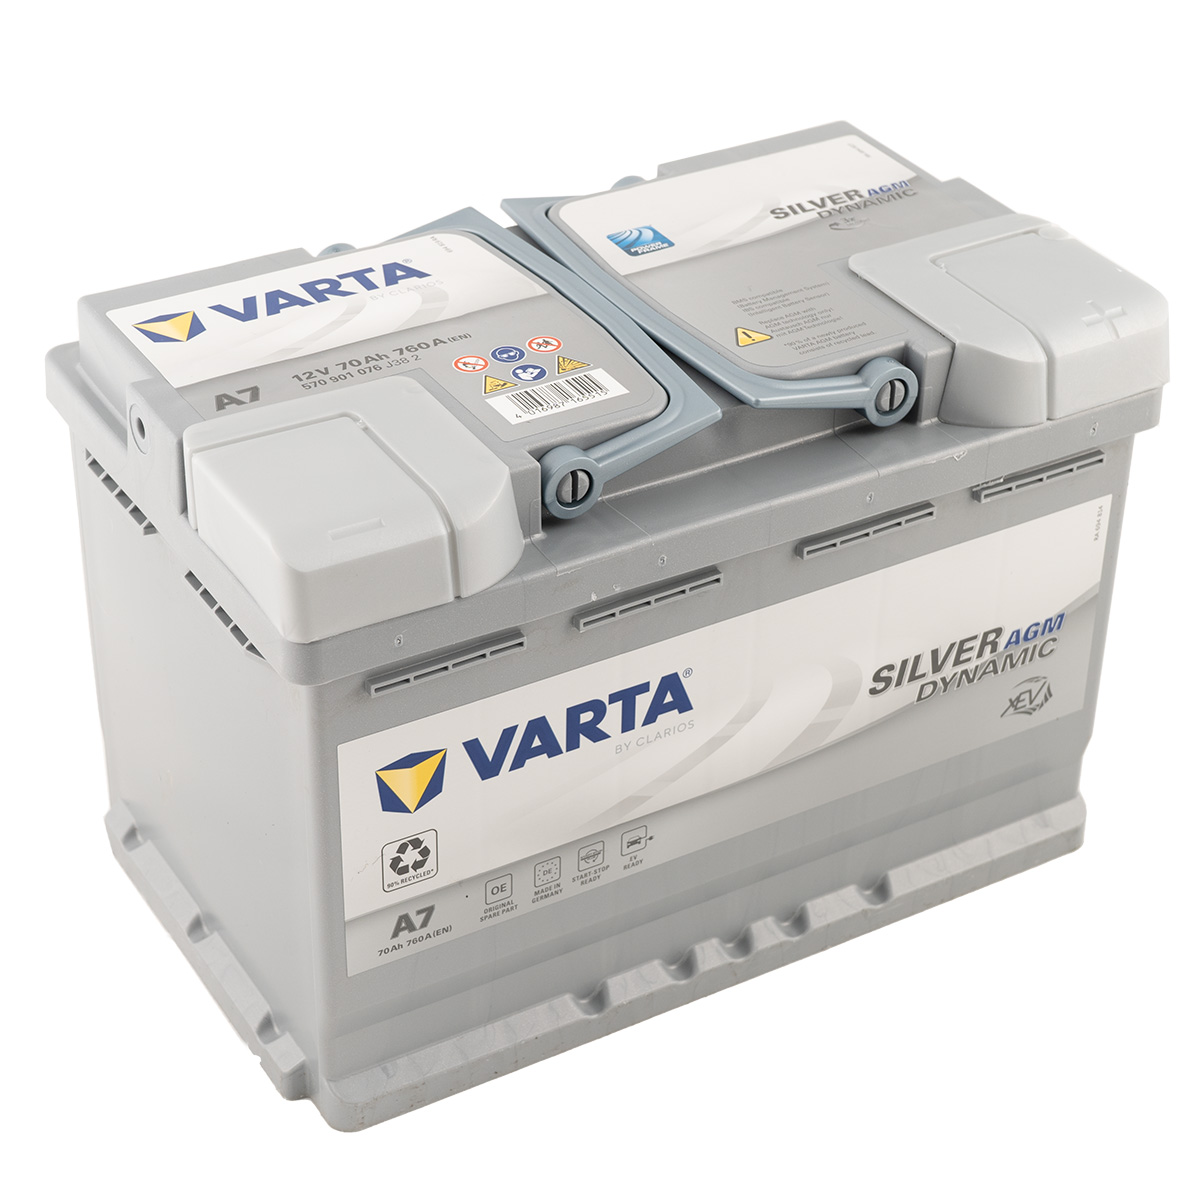 Autobatterie 12V 70Ah 760 A/EN AGM Start-Stop (ex E39) Varta A7 Silver  Dynamic 4016987144503